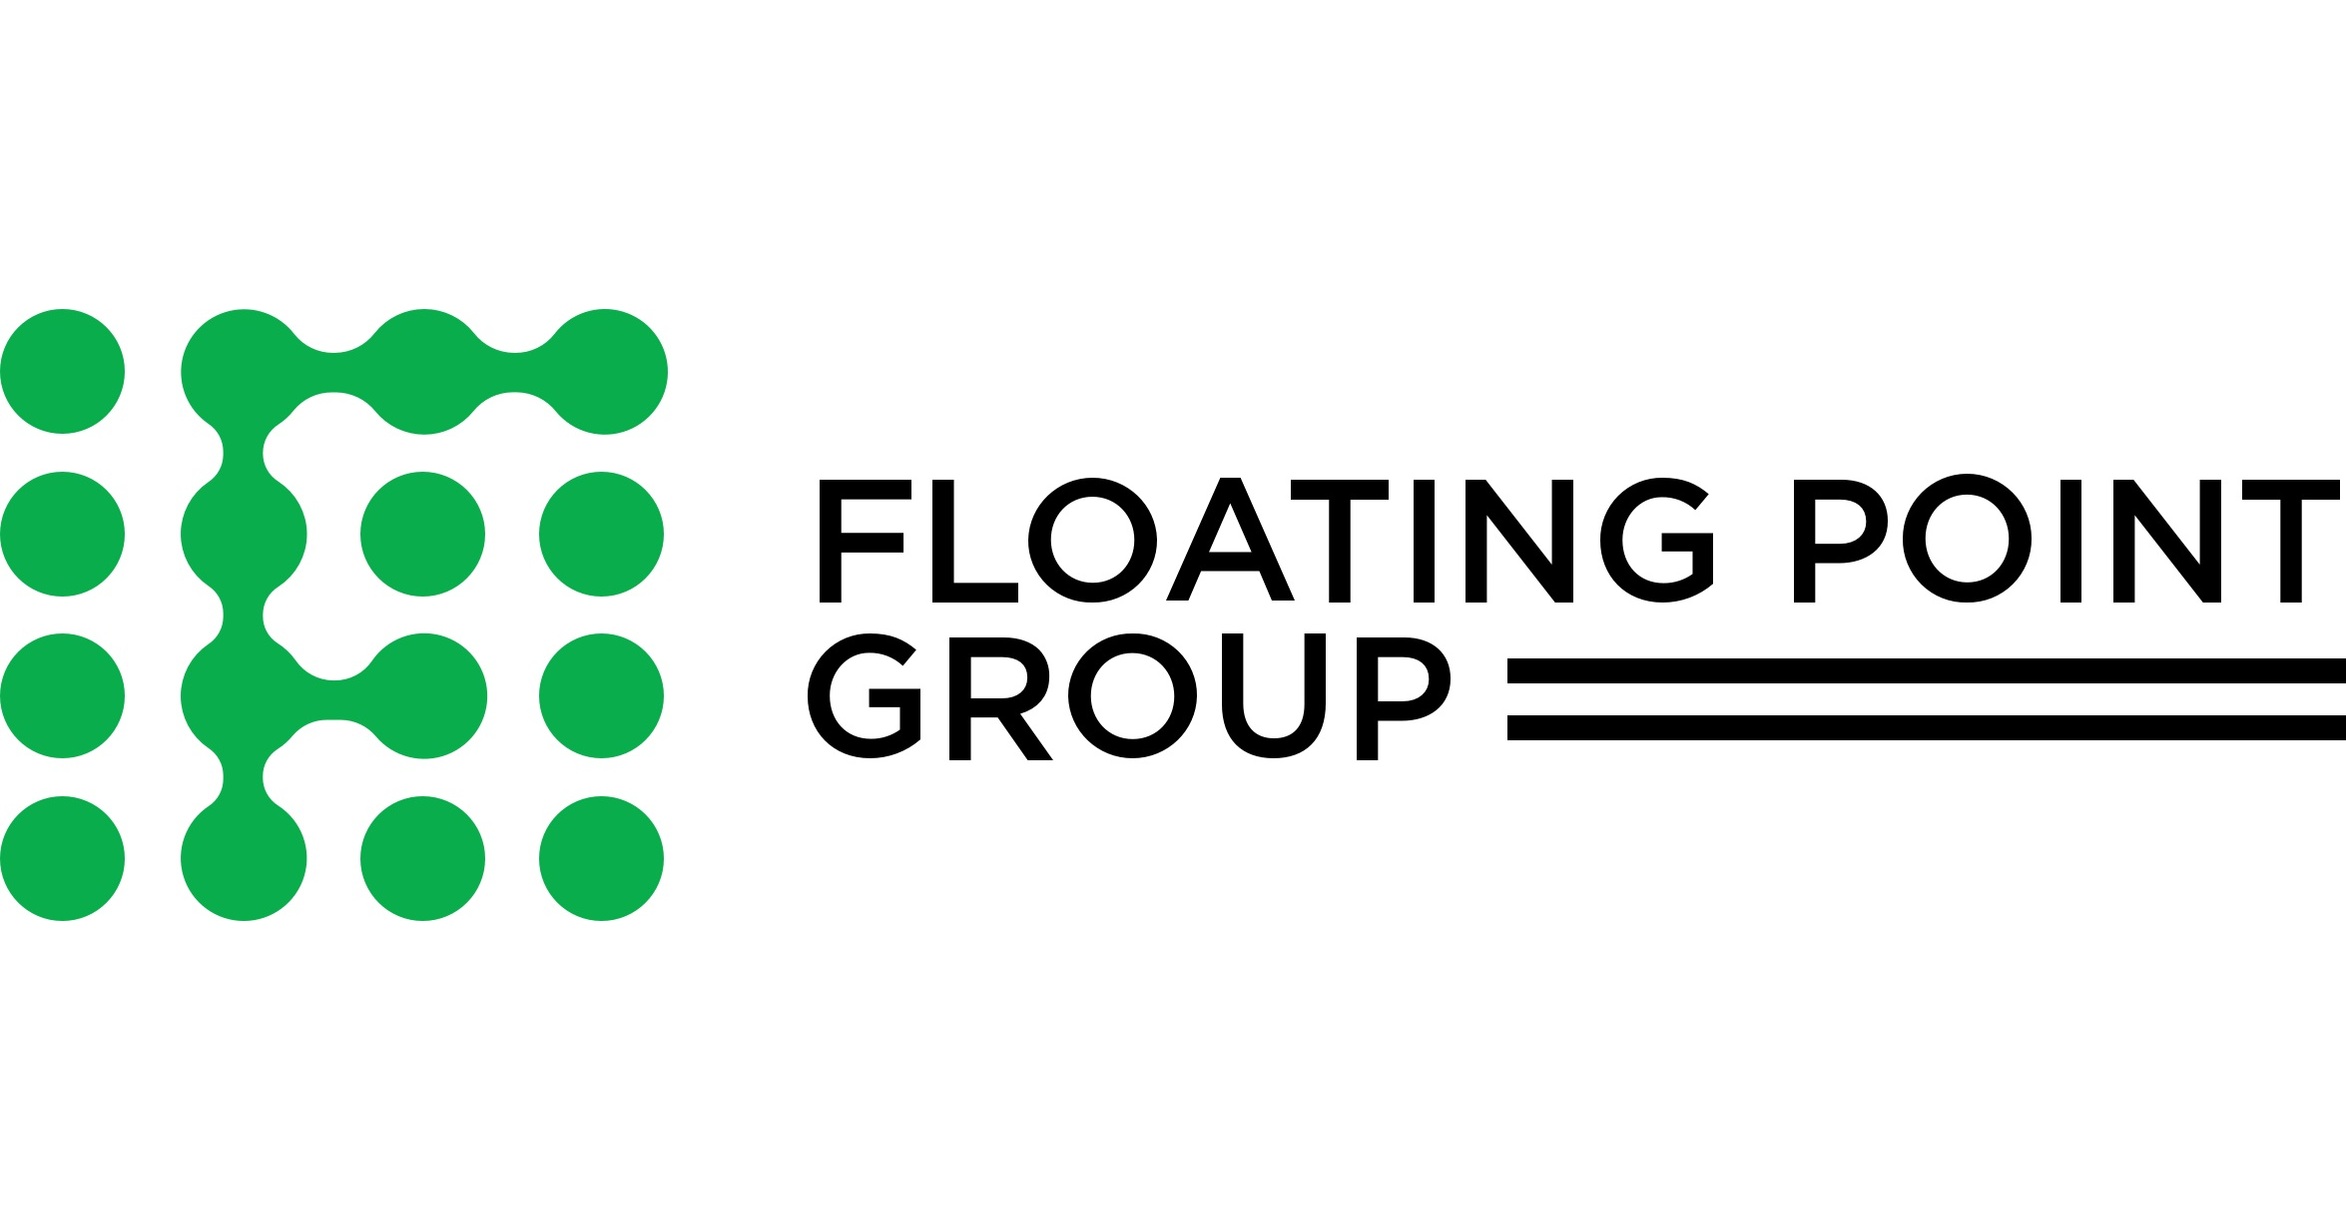 floating point group quantitative startup traders 2m raises crypto brokerage mit prime bring logo